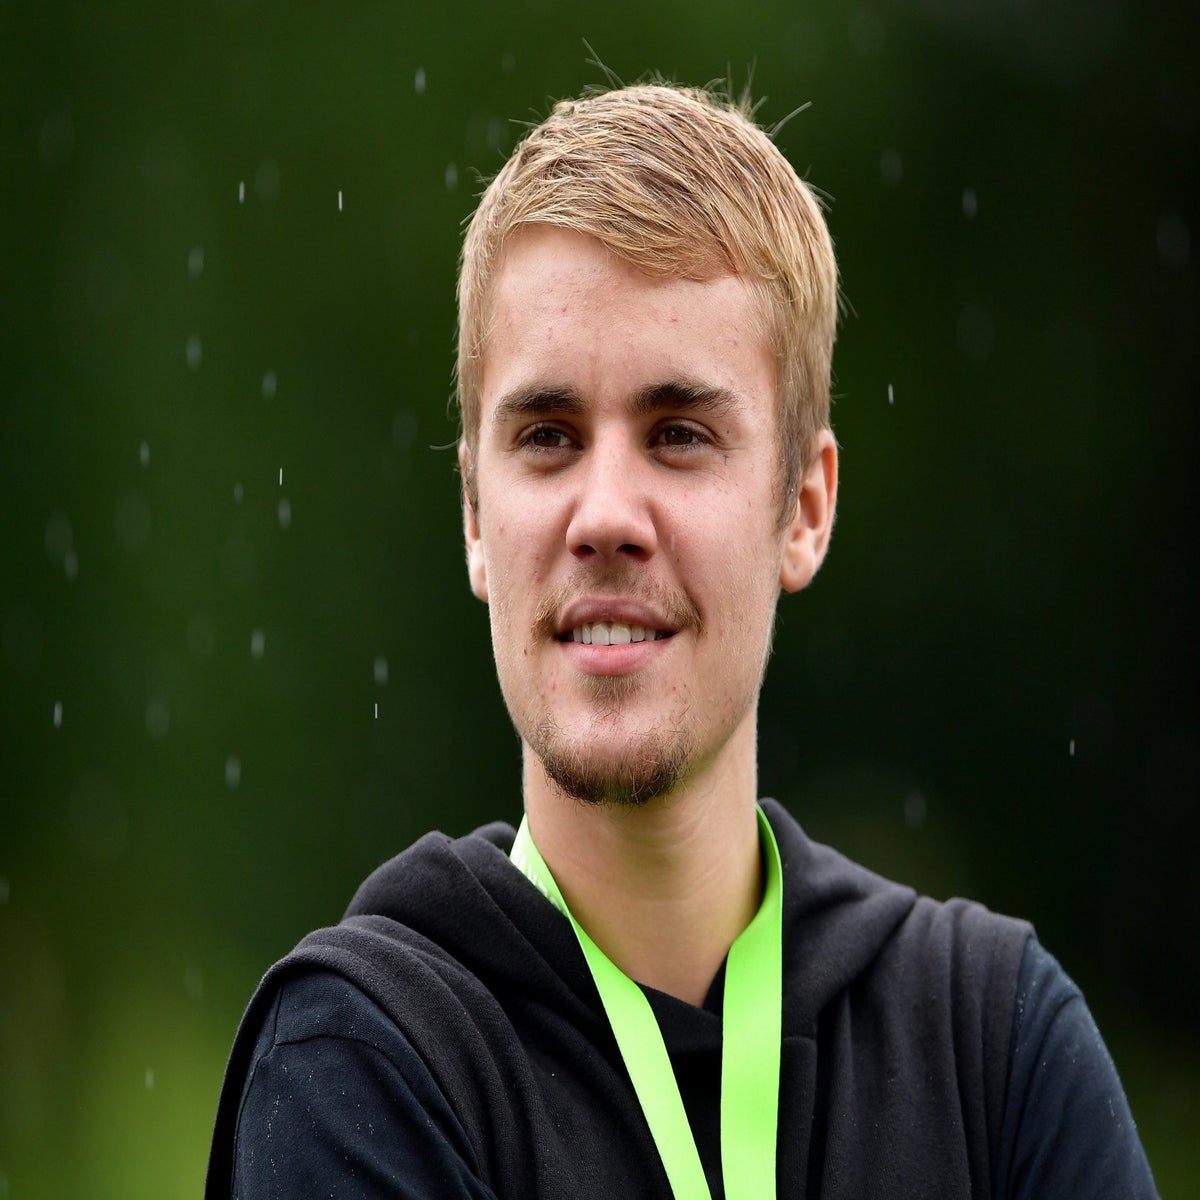 Justin Bieber Cancels World Tour, Citing Health Concerns